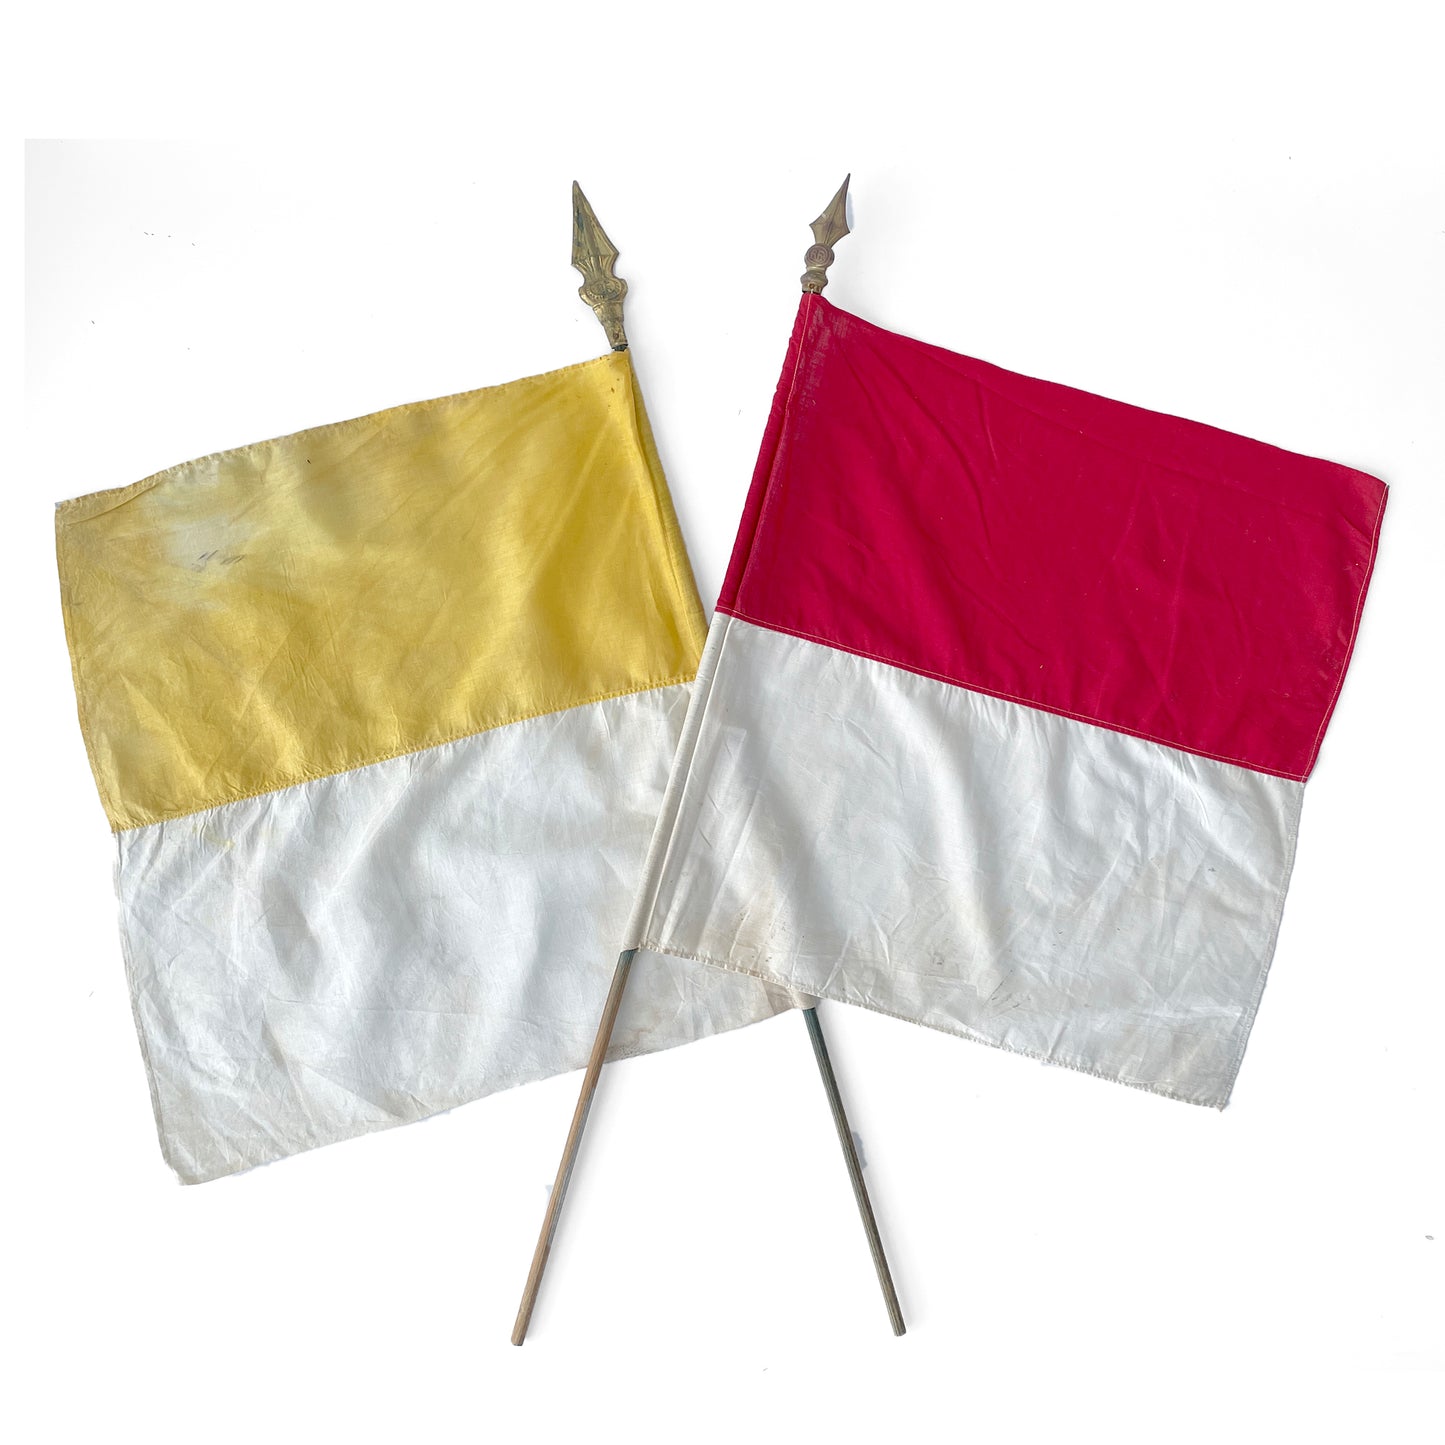 Pair of Vintage Signal Flags Circa 1940 – Red/White & Yellow/white